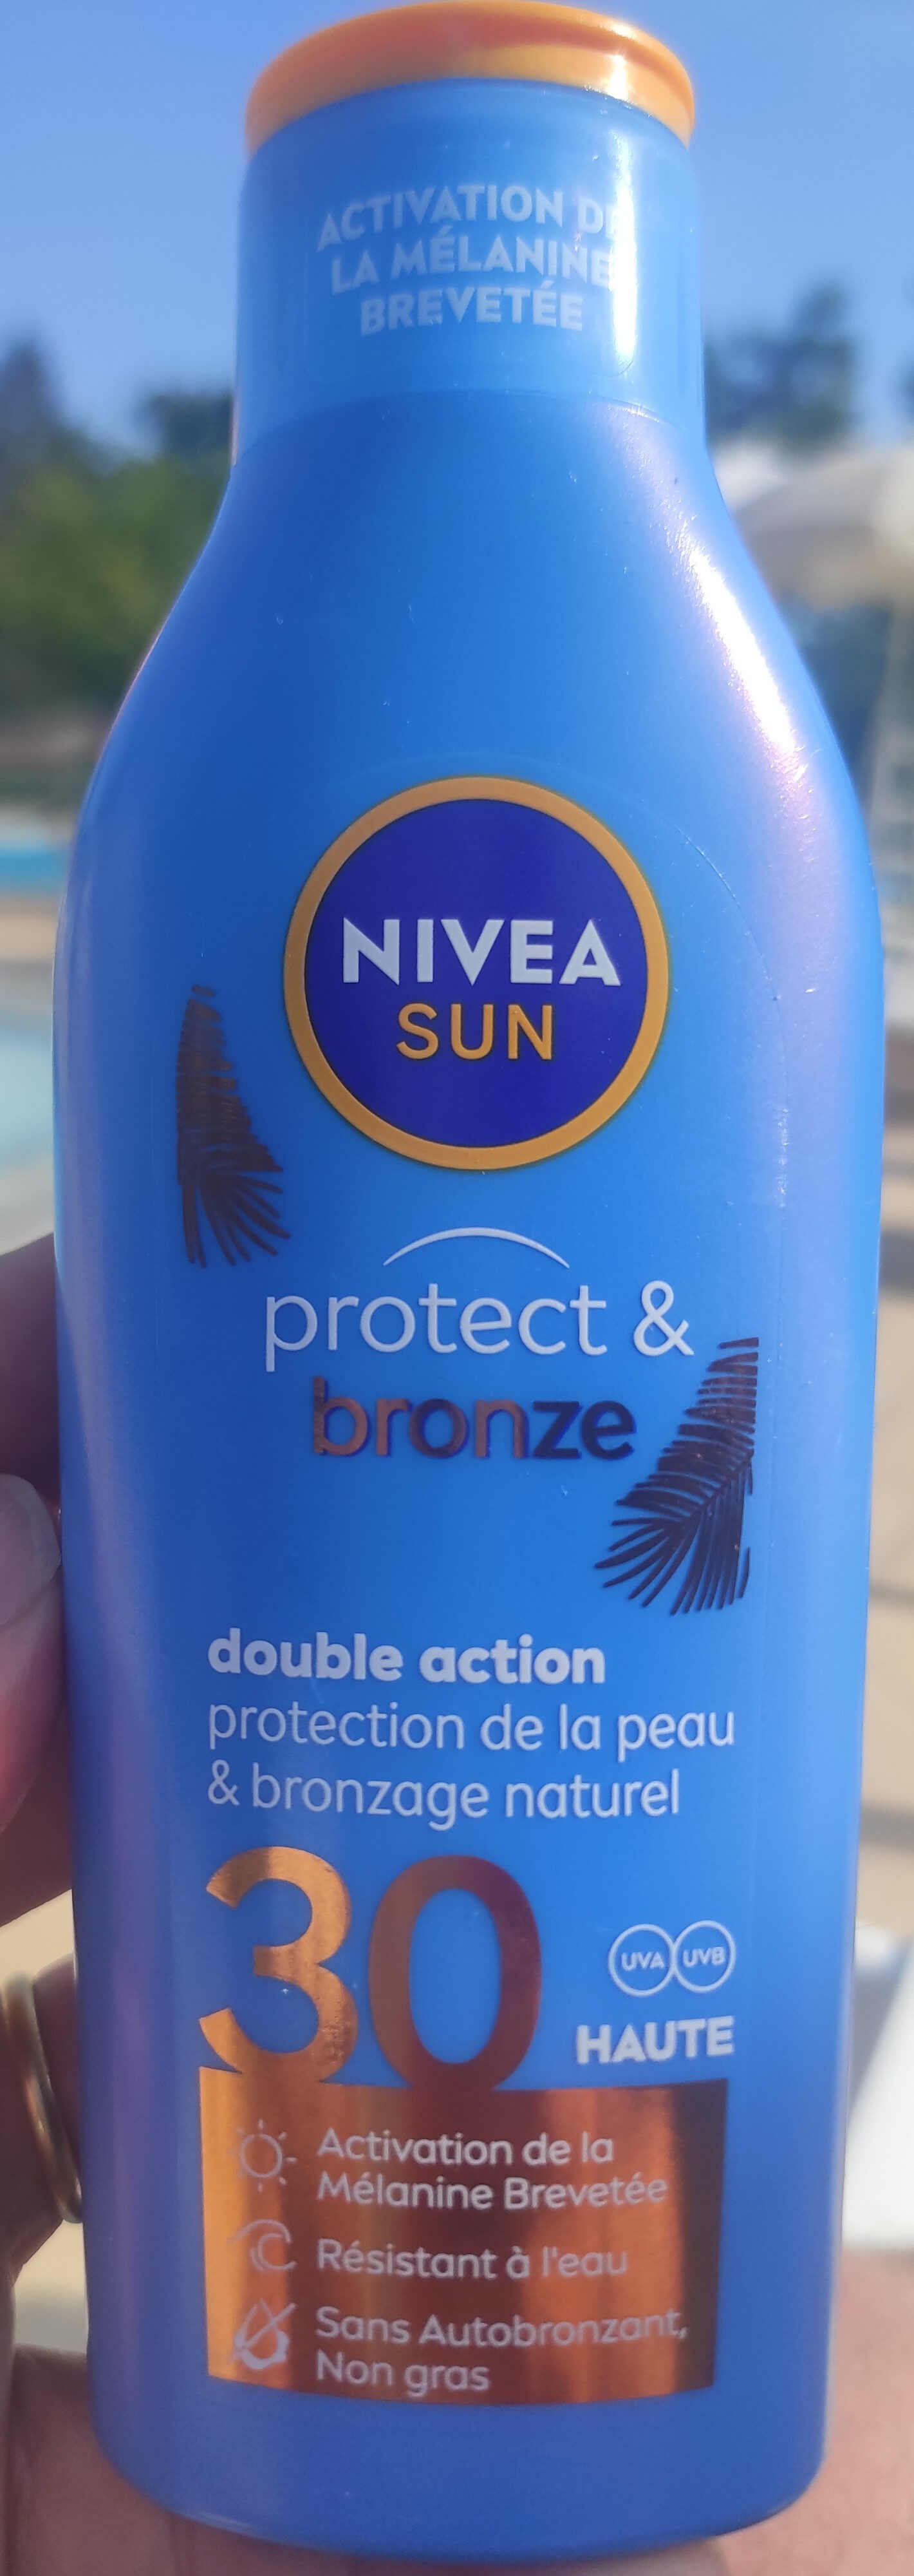 Nivea Sun protect & bronze - 製品 - fr